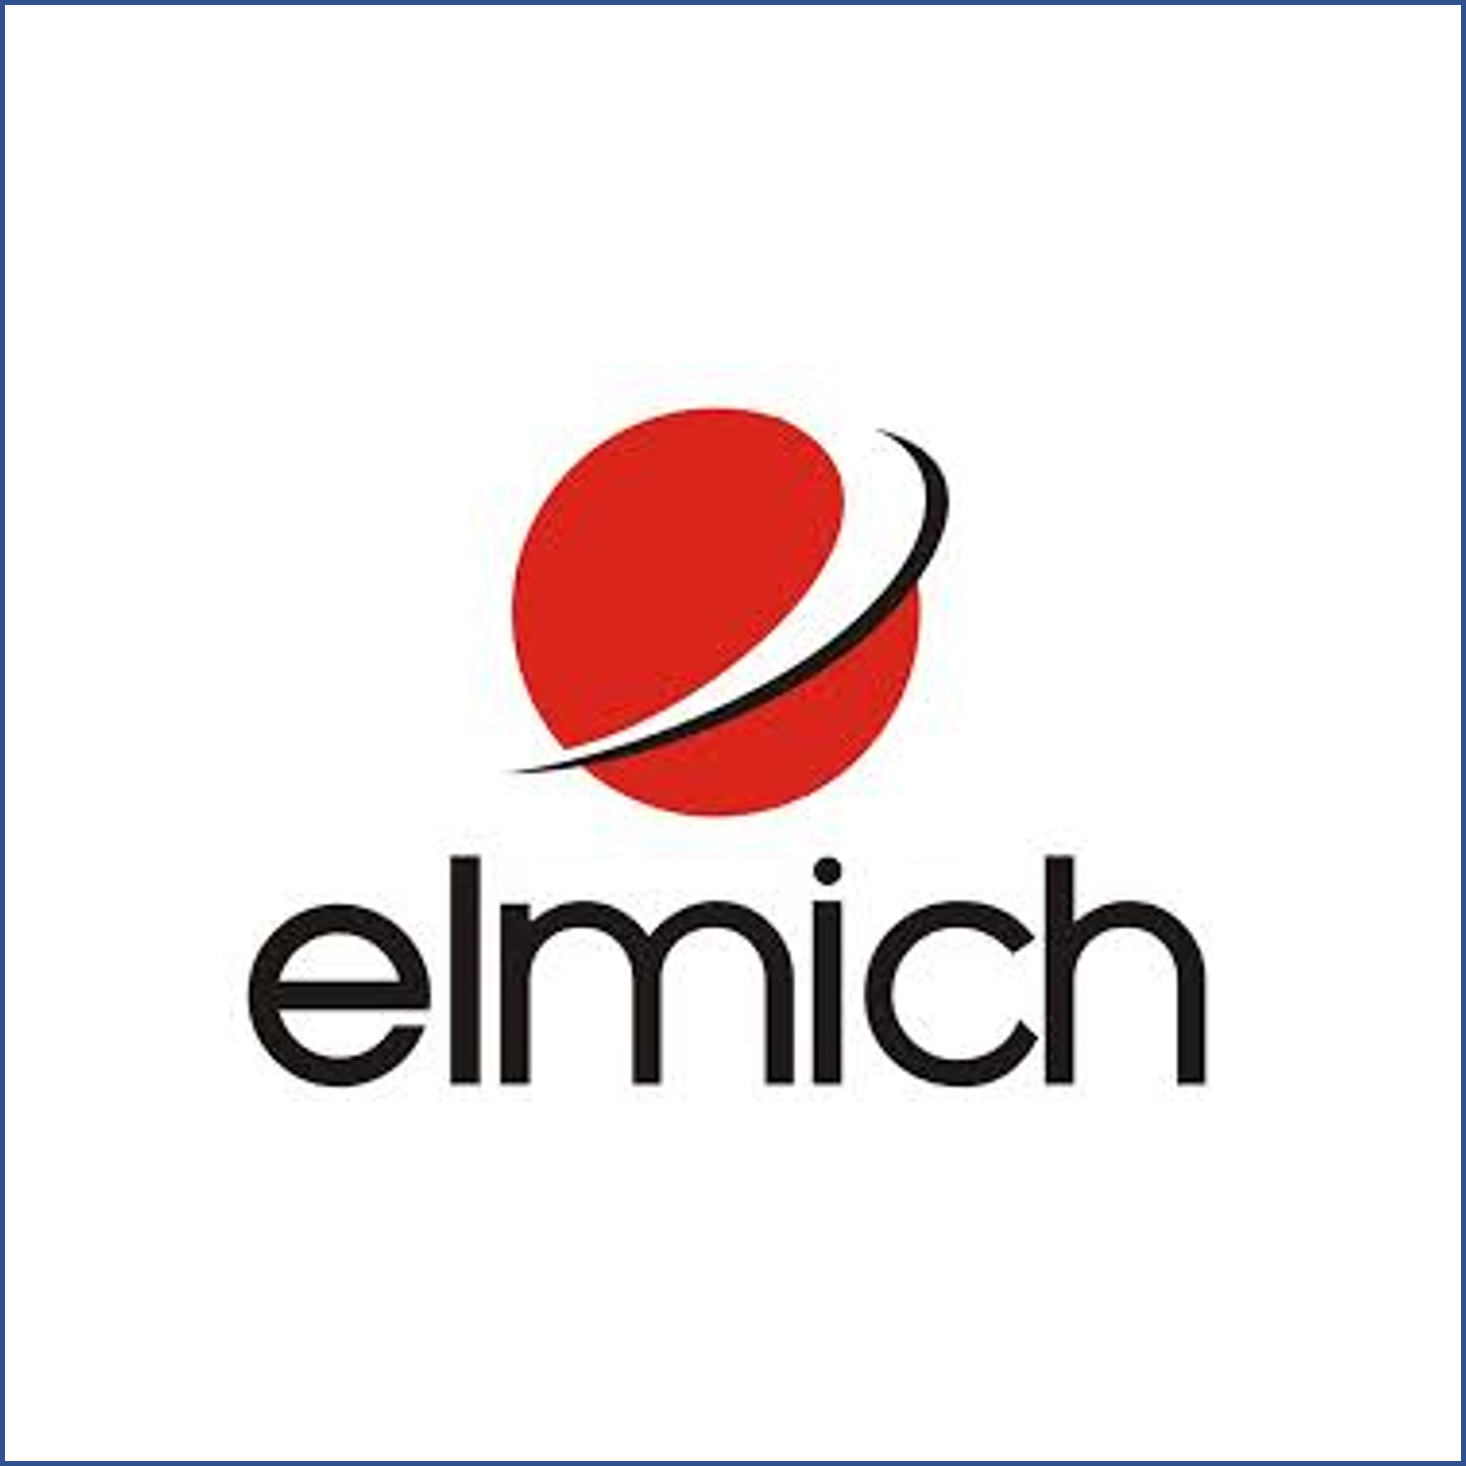 Elmich